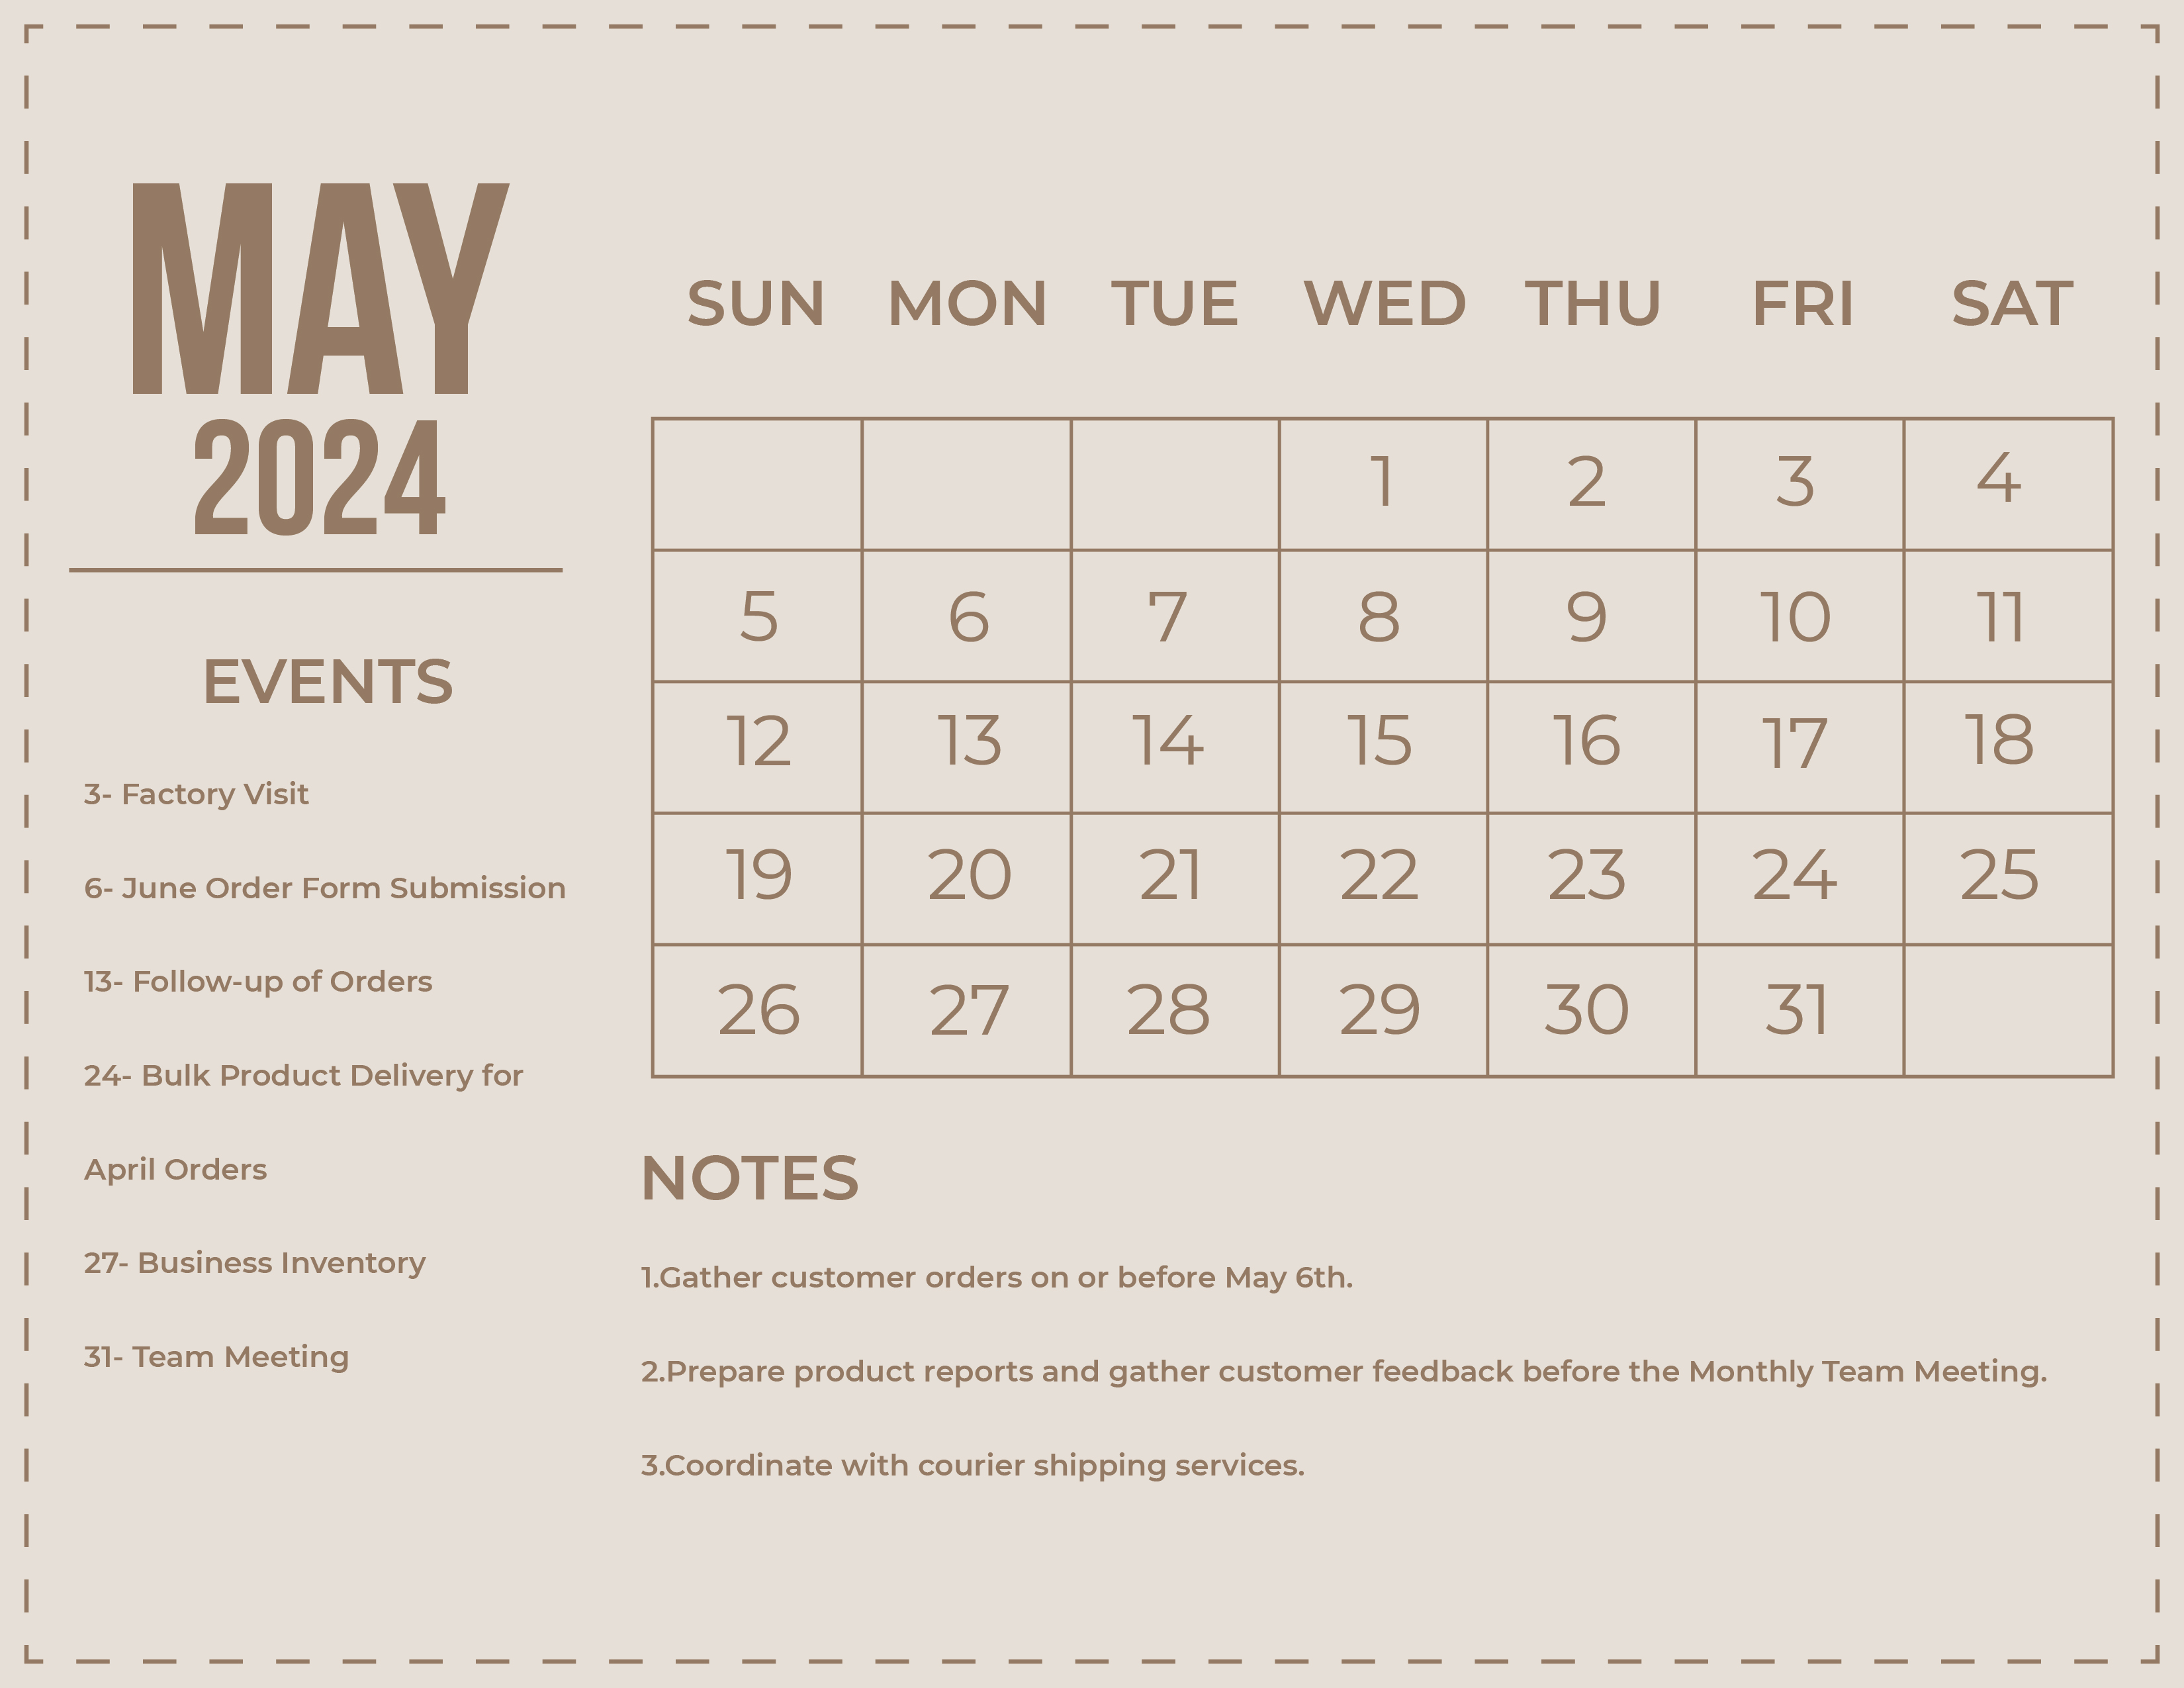 May 2024 Calendar Download in Word, Illustrator, EPS, SVG, JPG